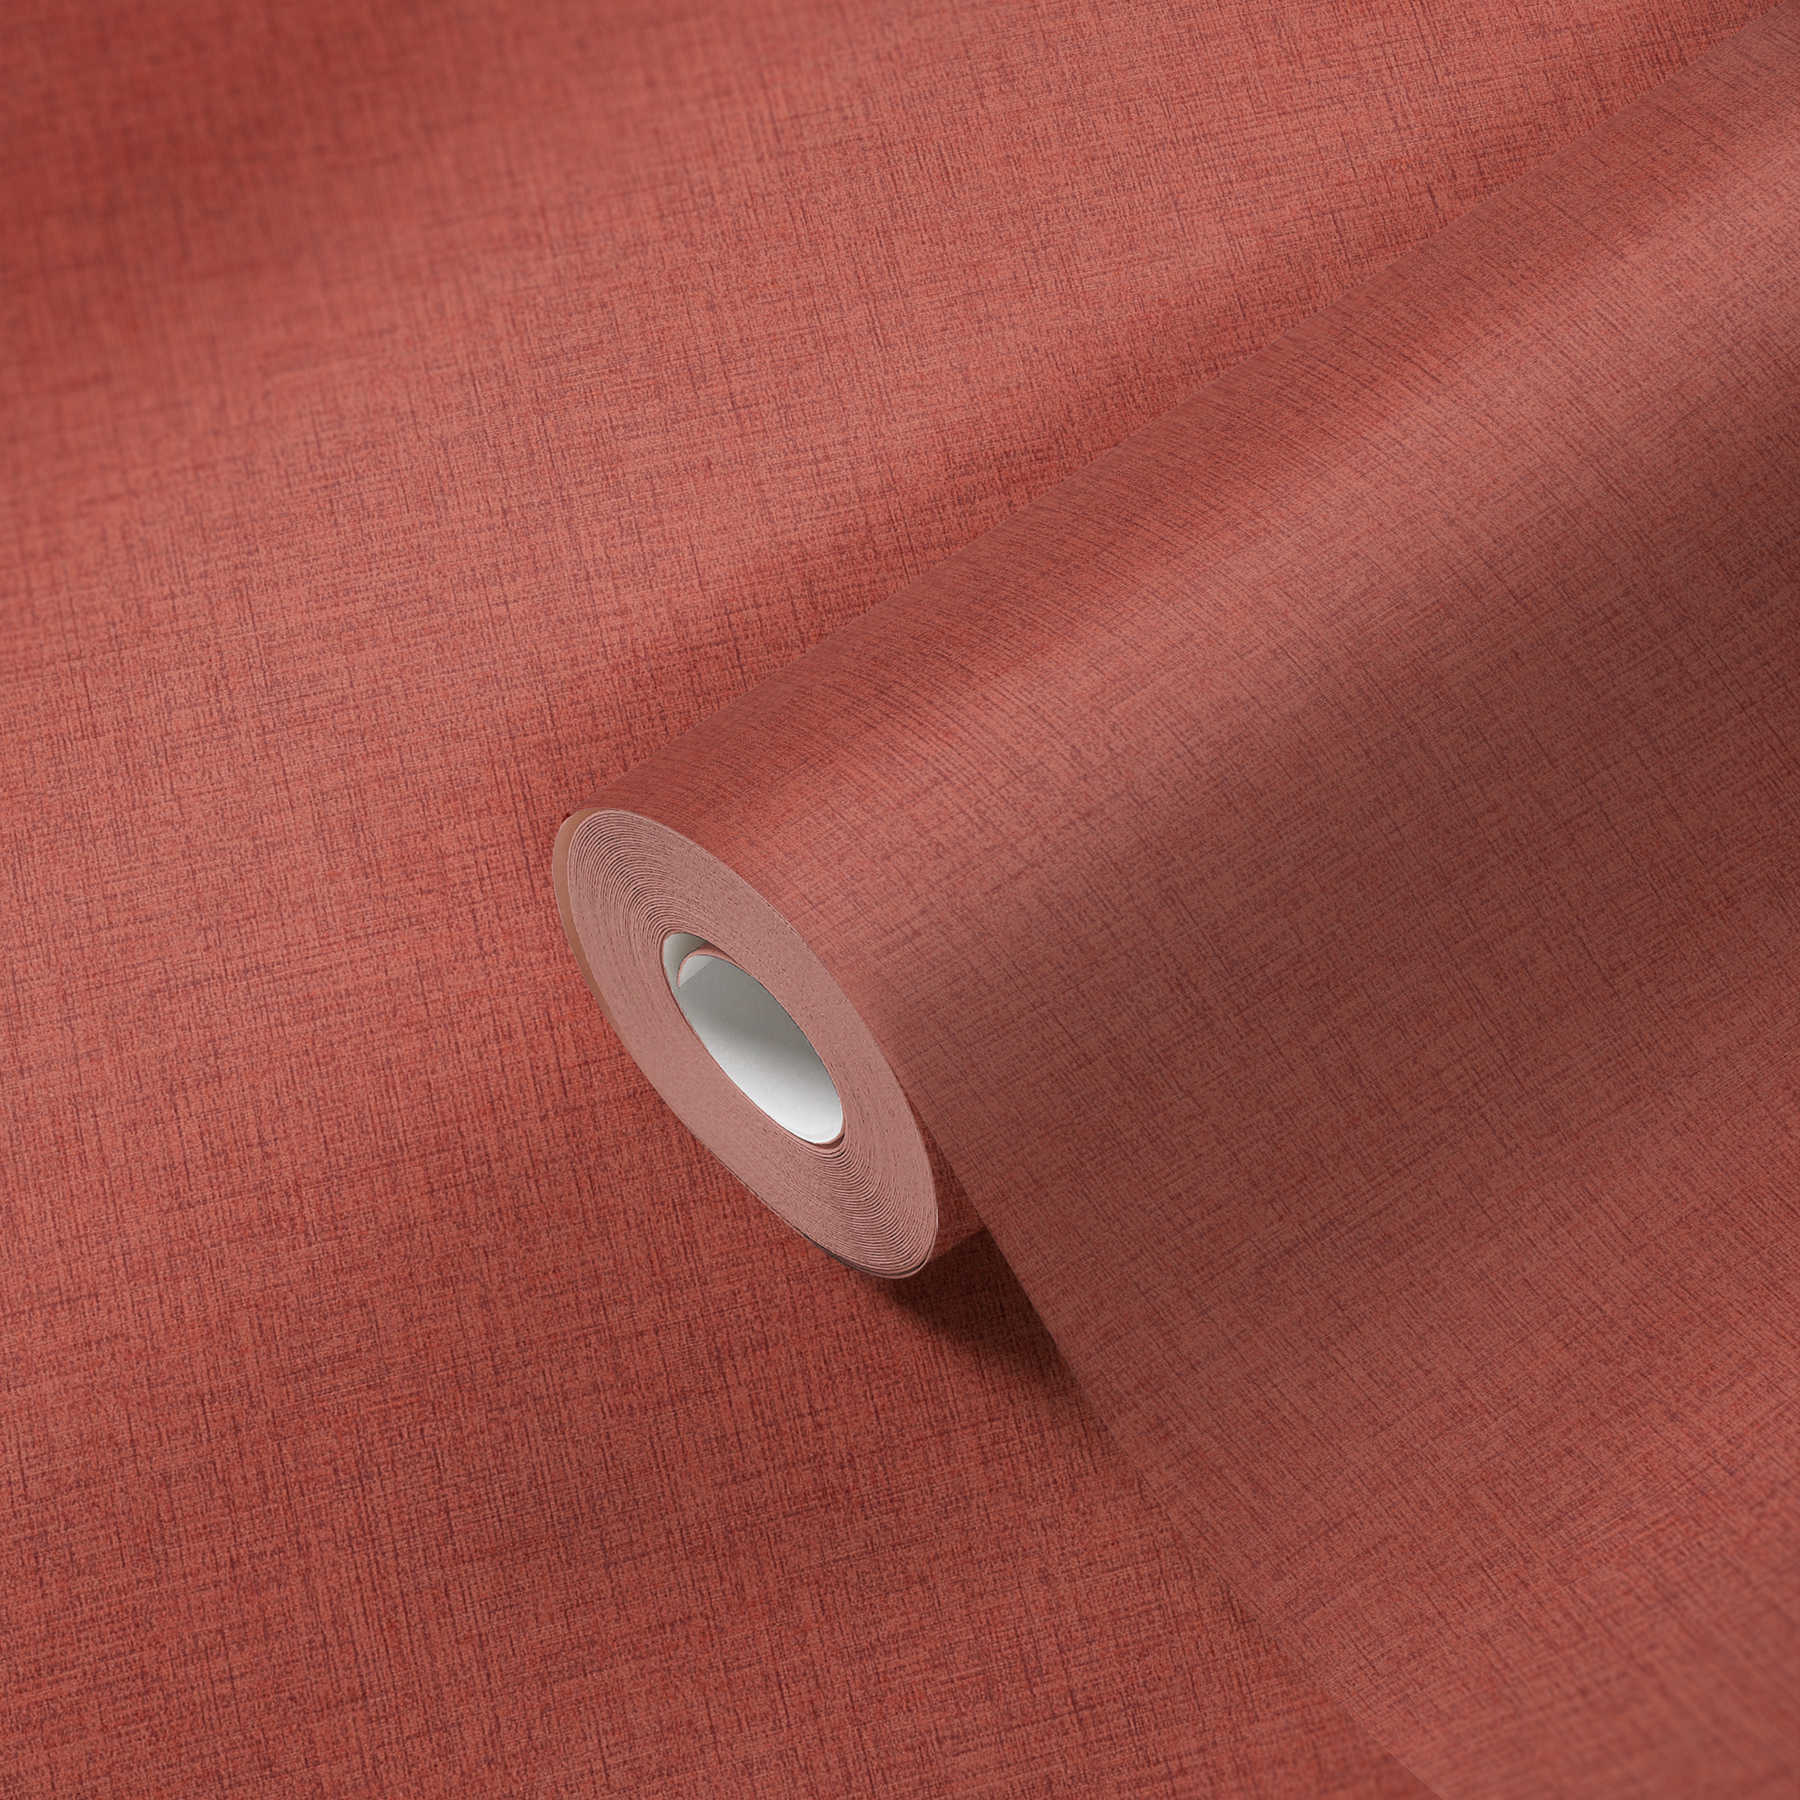             Papel pintado no tejido liso con aspecto textil - rojo
        